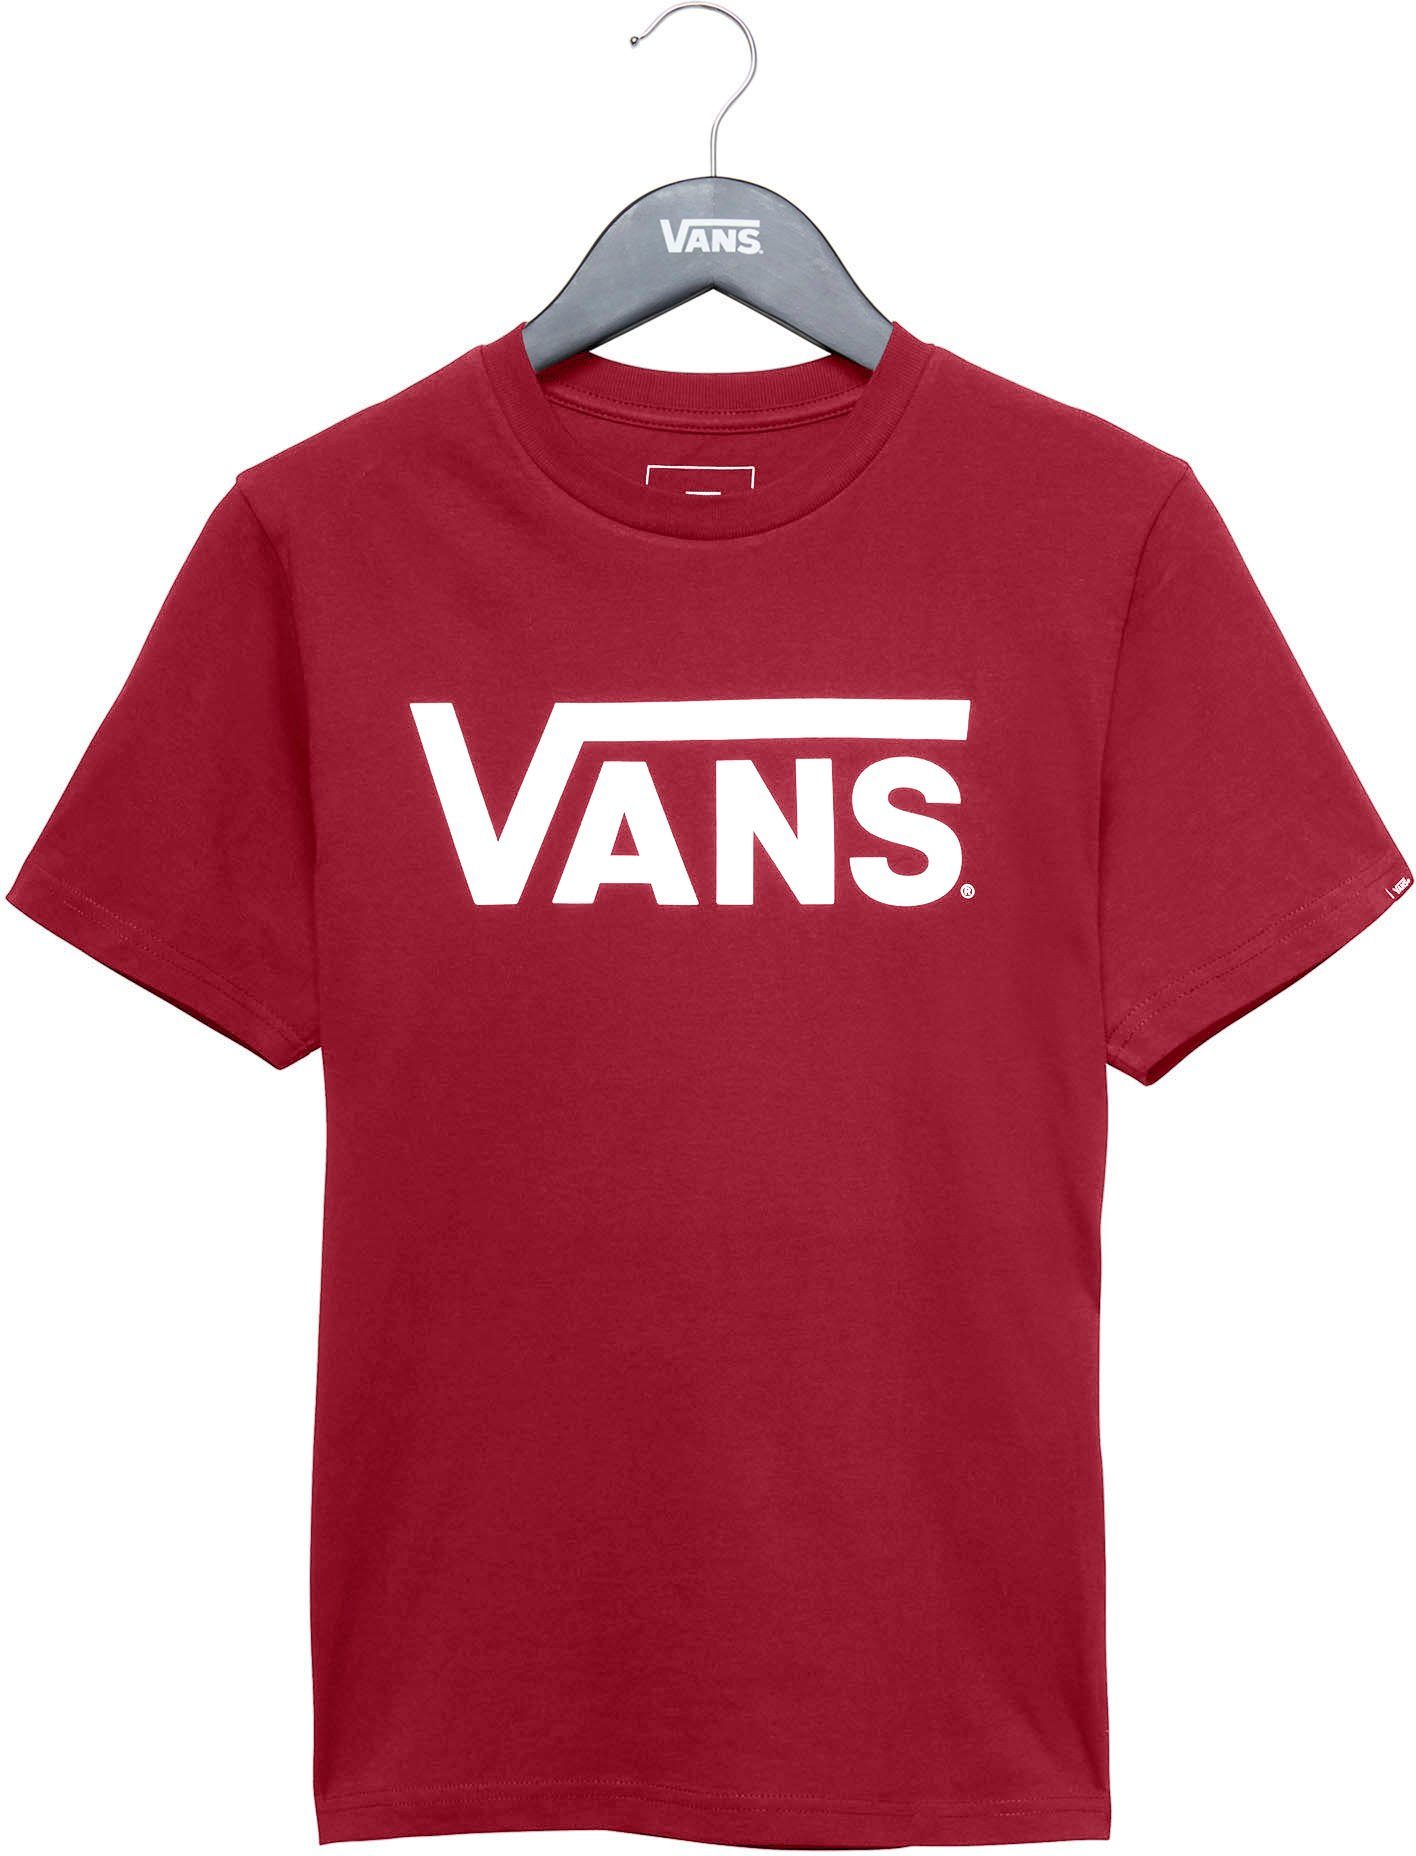 BOYS chili CLASSIC T-Shirt pepper VANS Vans